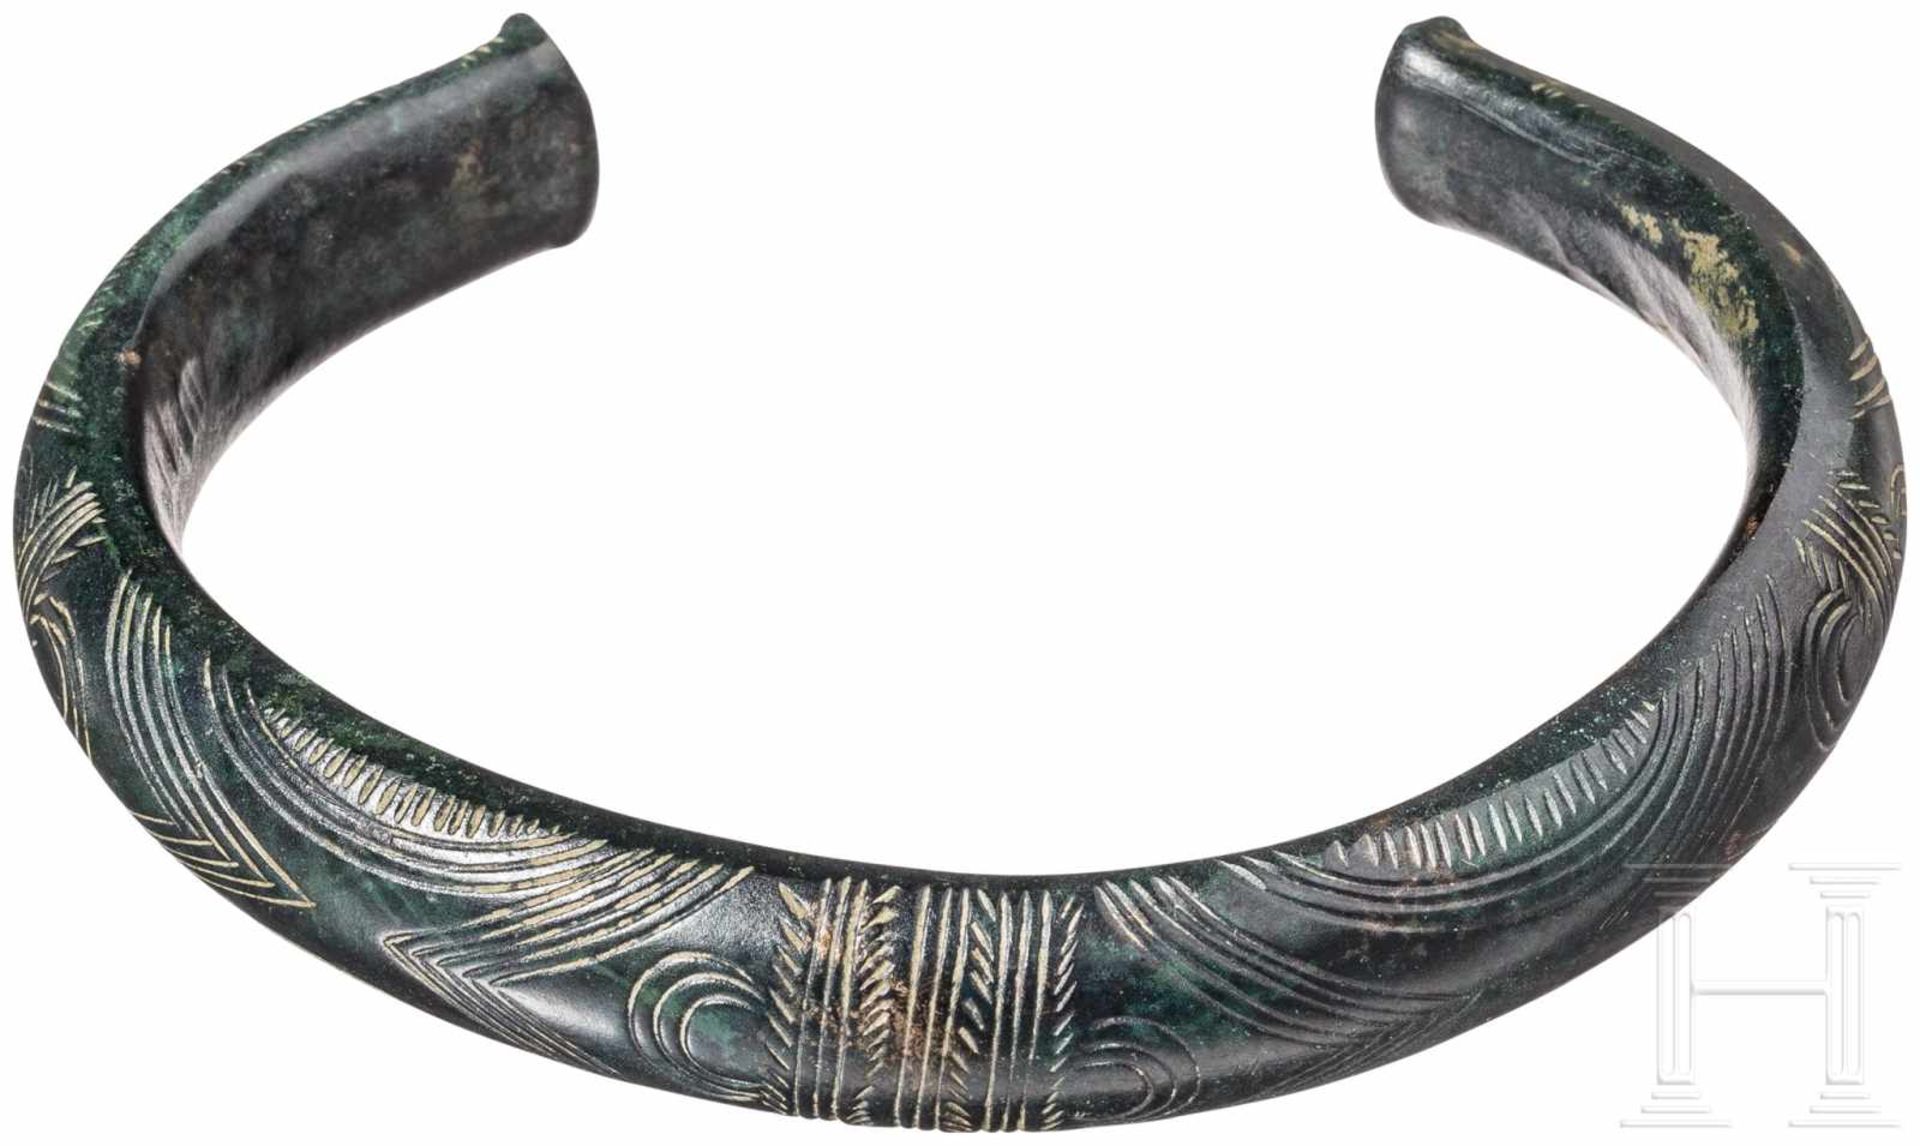 Großer, massiver Bronzearmreif, Bronzezeit,12. - 11. Jhdt. v.Chr.Massiver ovaler Bronzearmreif mit